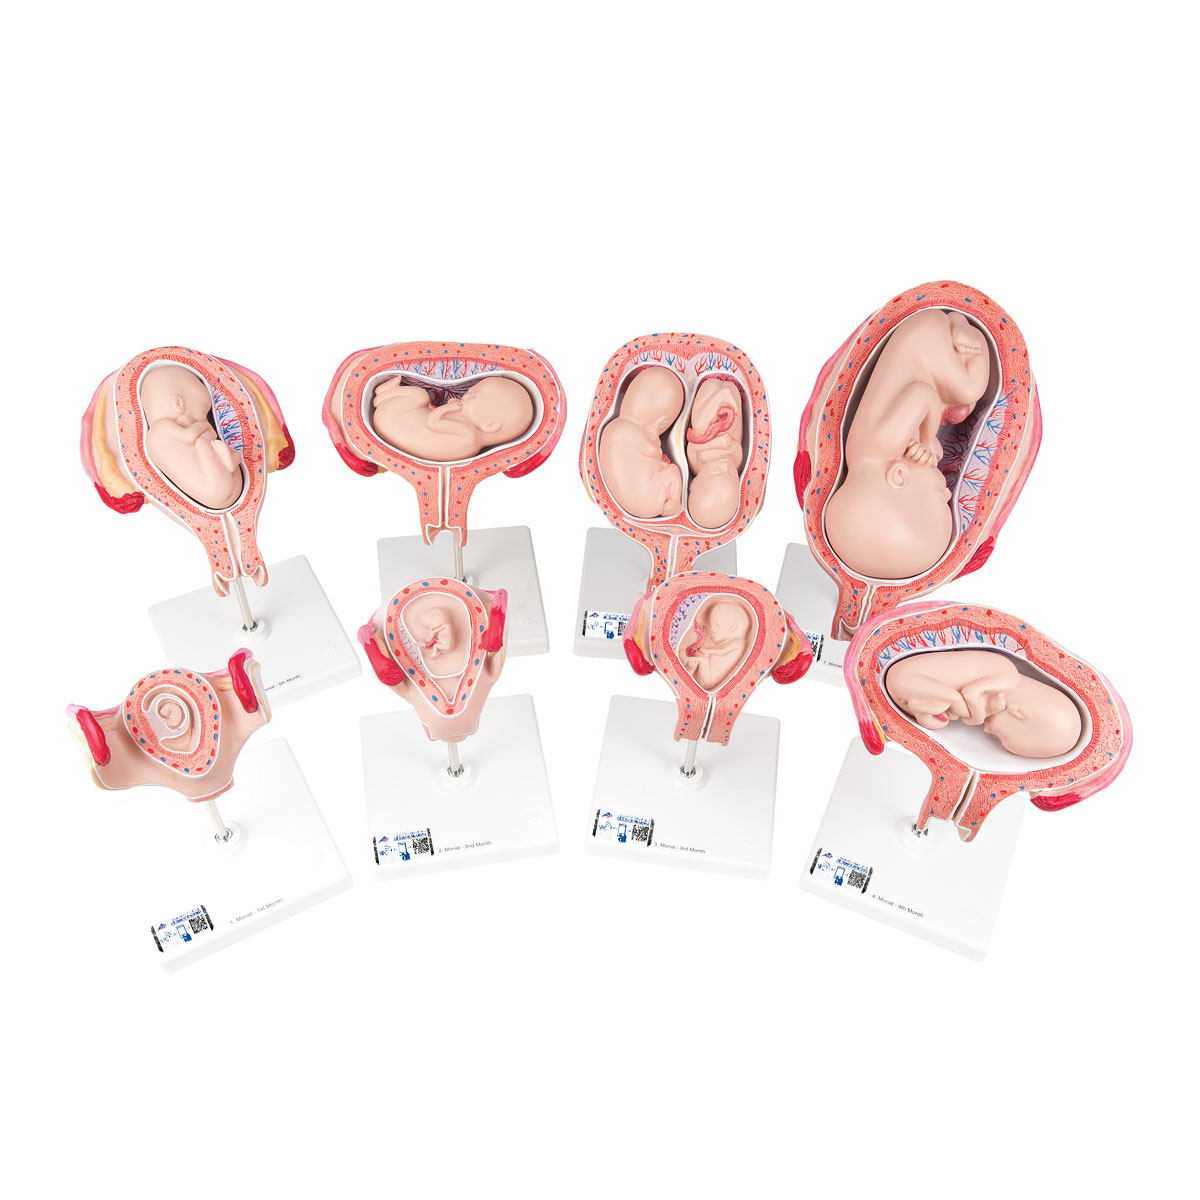 Medical Anatomical Fetus Development Model 8 Series High Quality